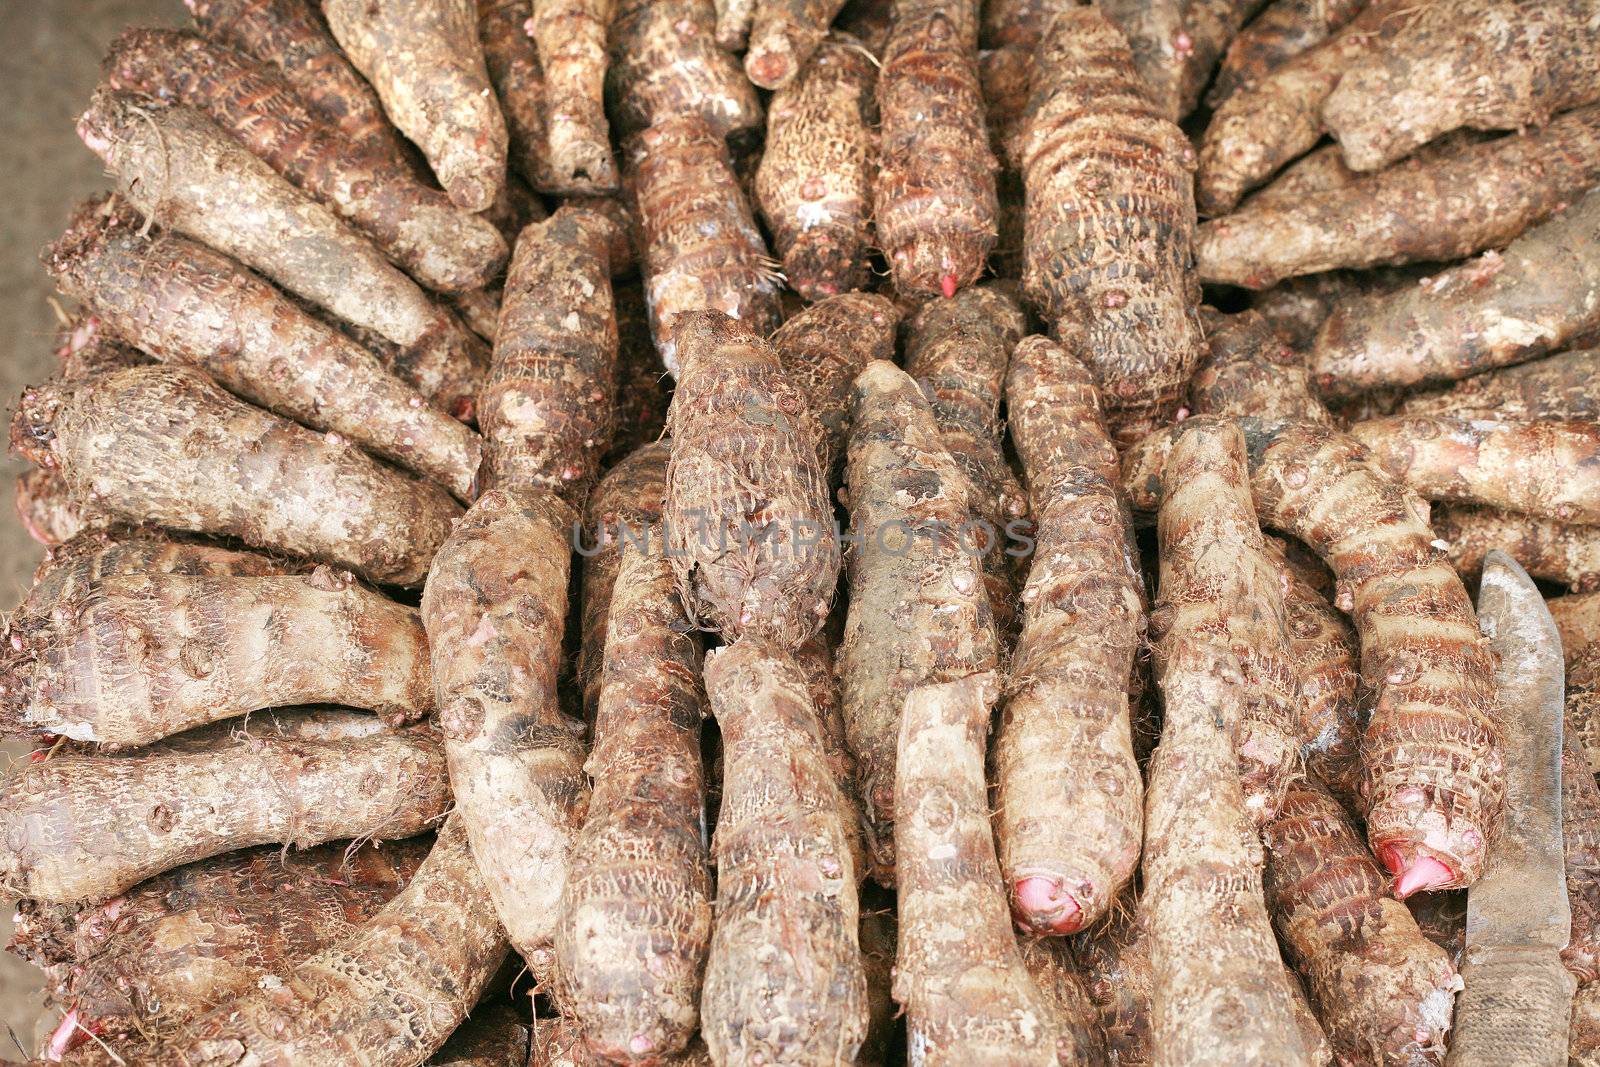 background of fresh taro root (colocasia)